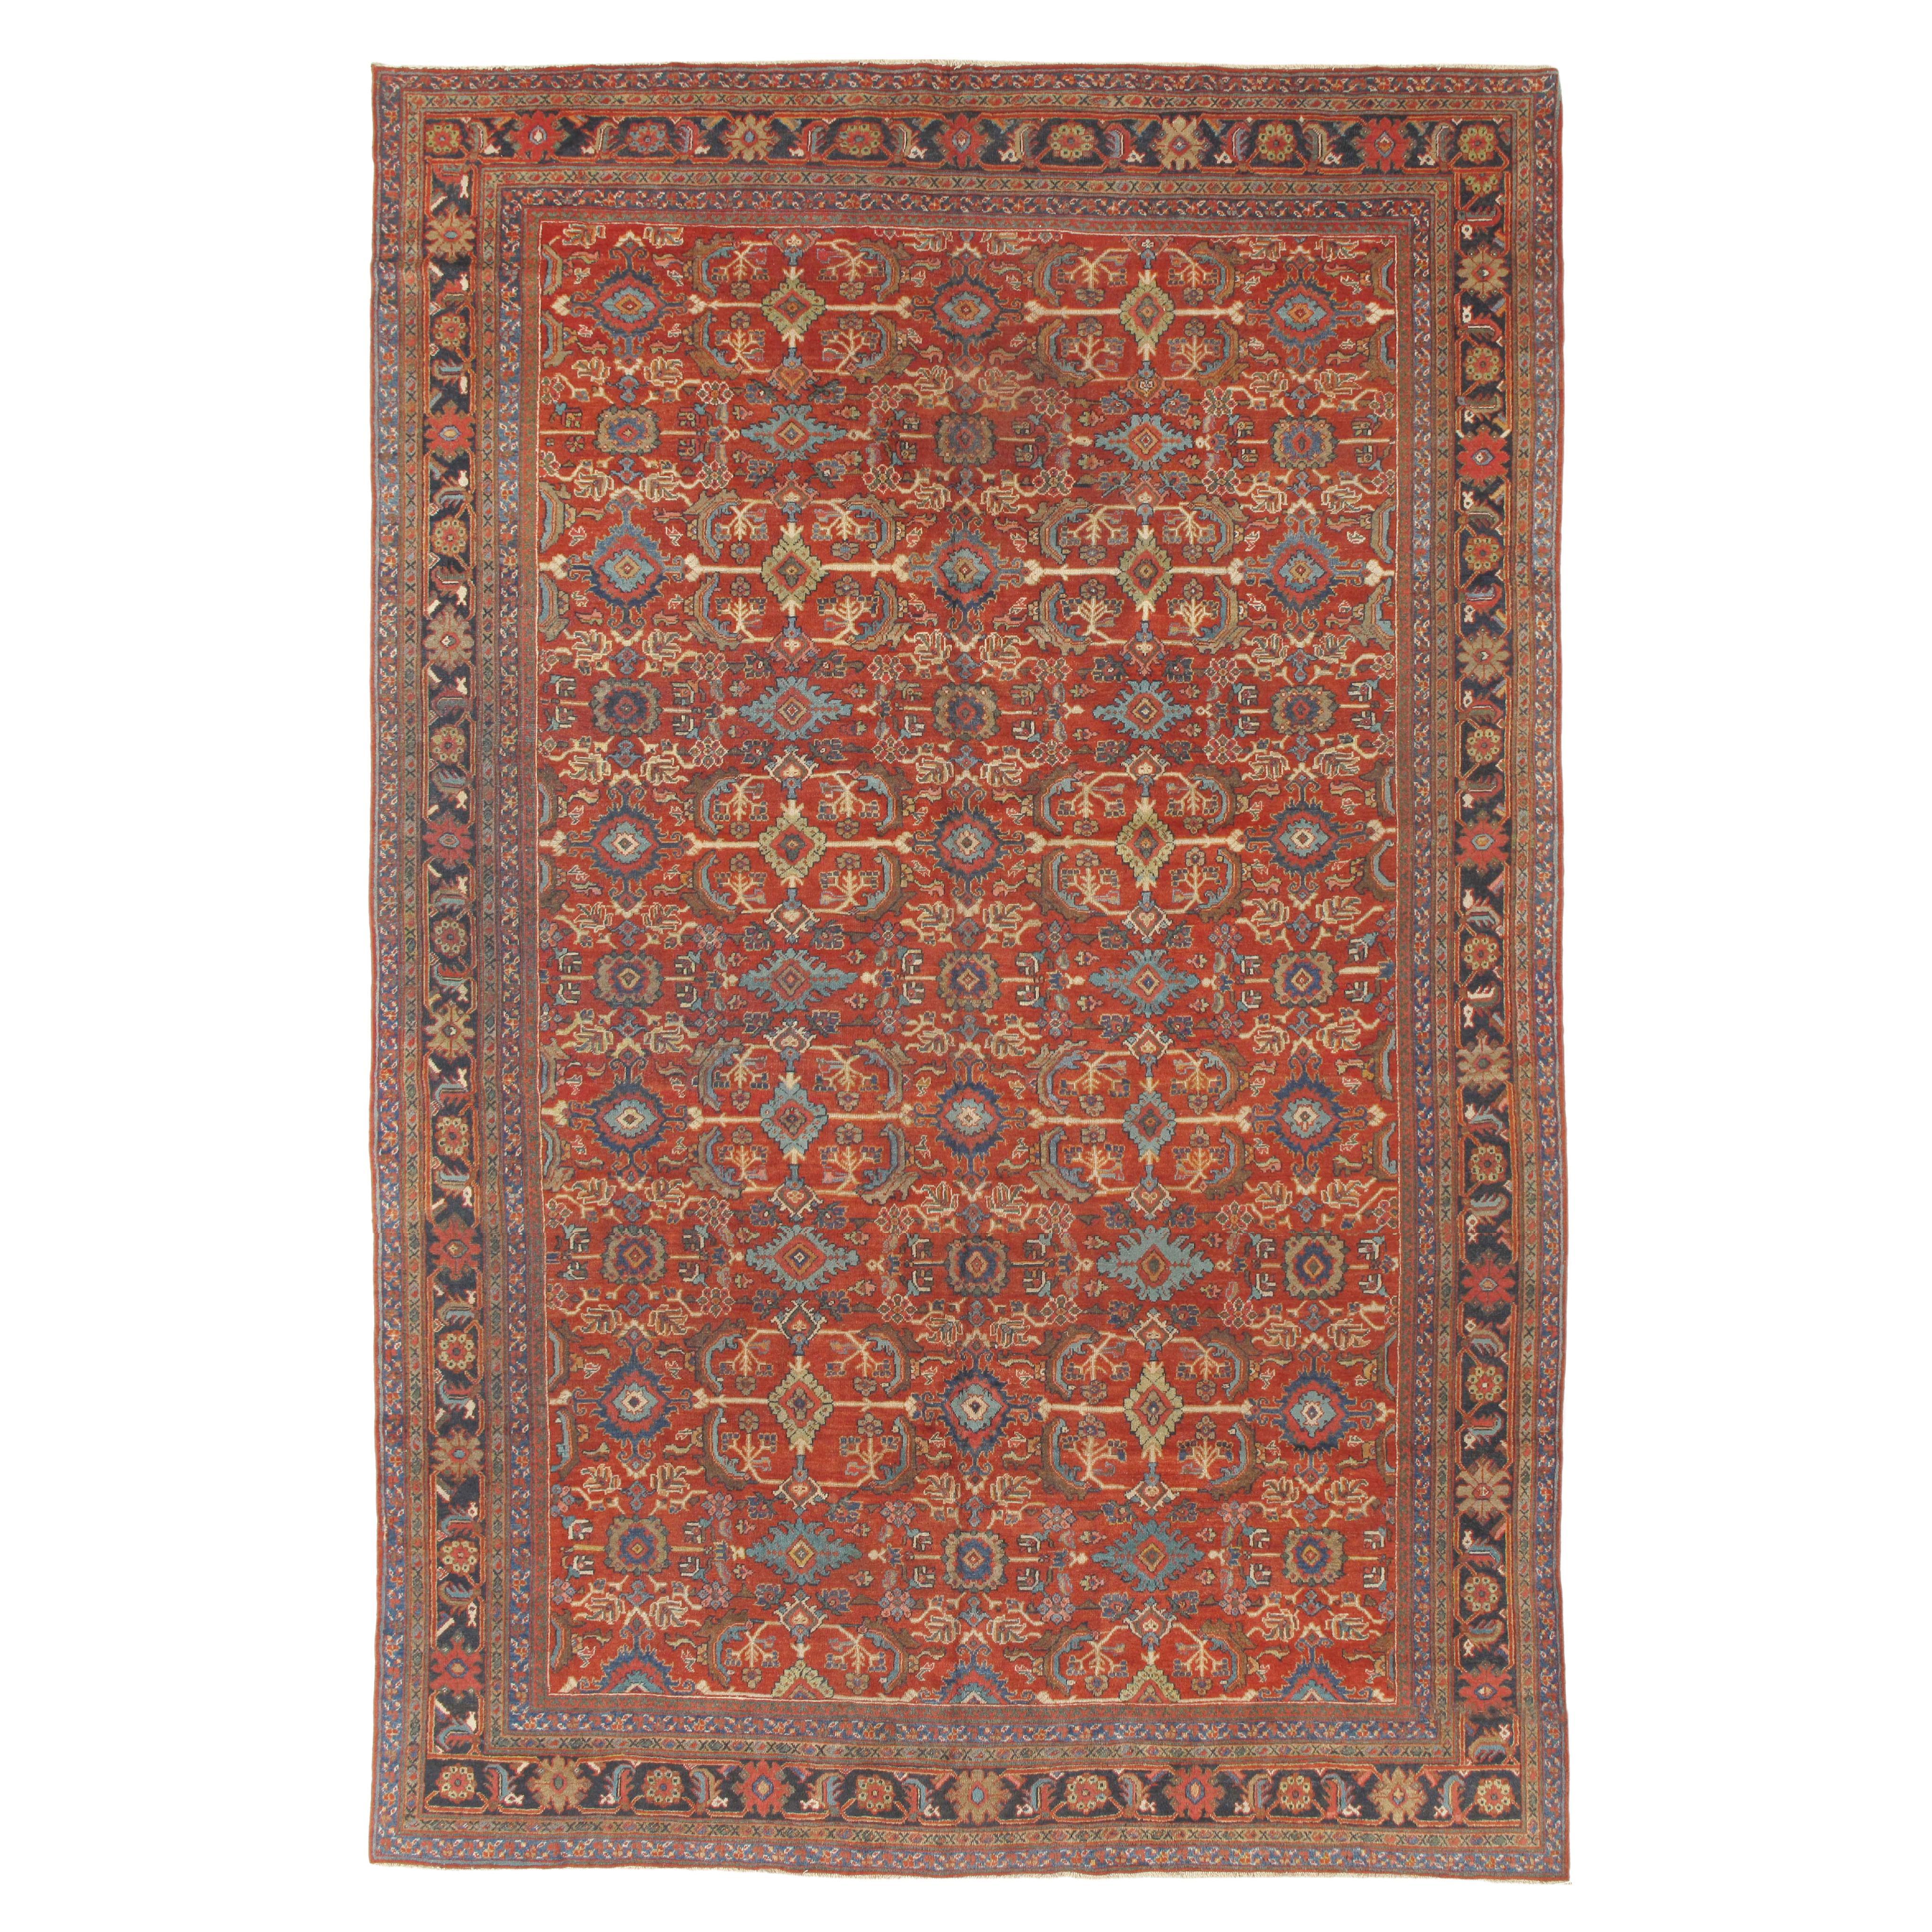 Antique Mahal Sultanabad Carpet Rug  9'8 x 14'6